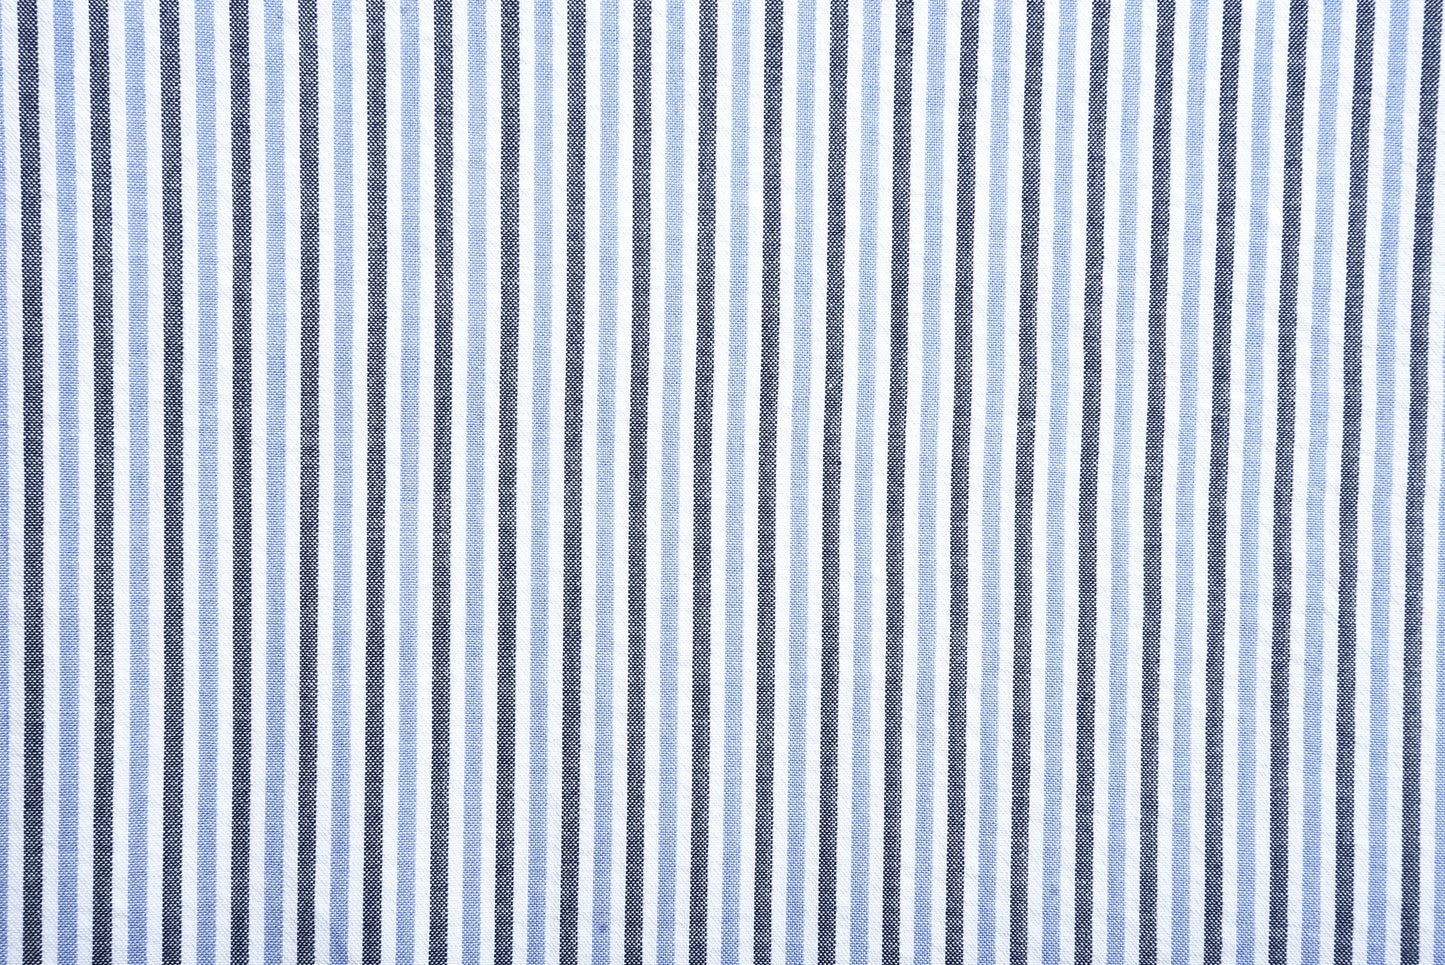 Dark Blue With Black Stripes On White Shirt